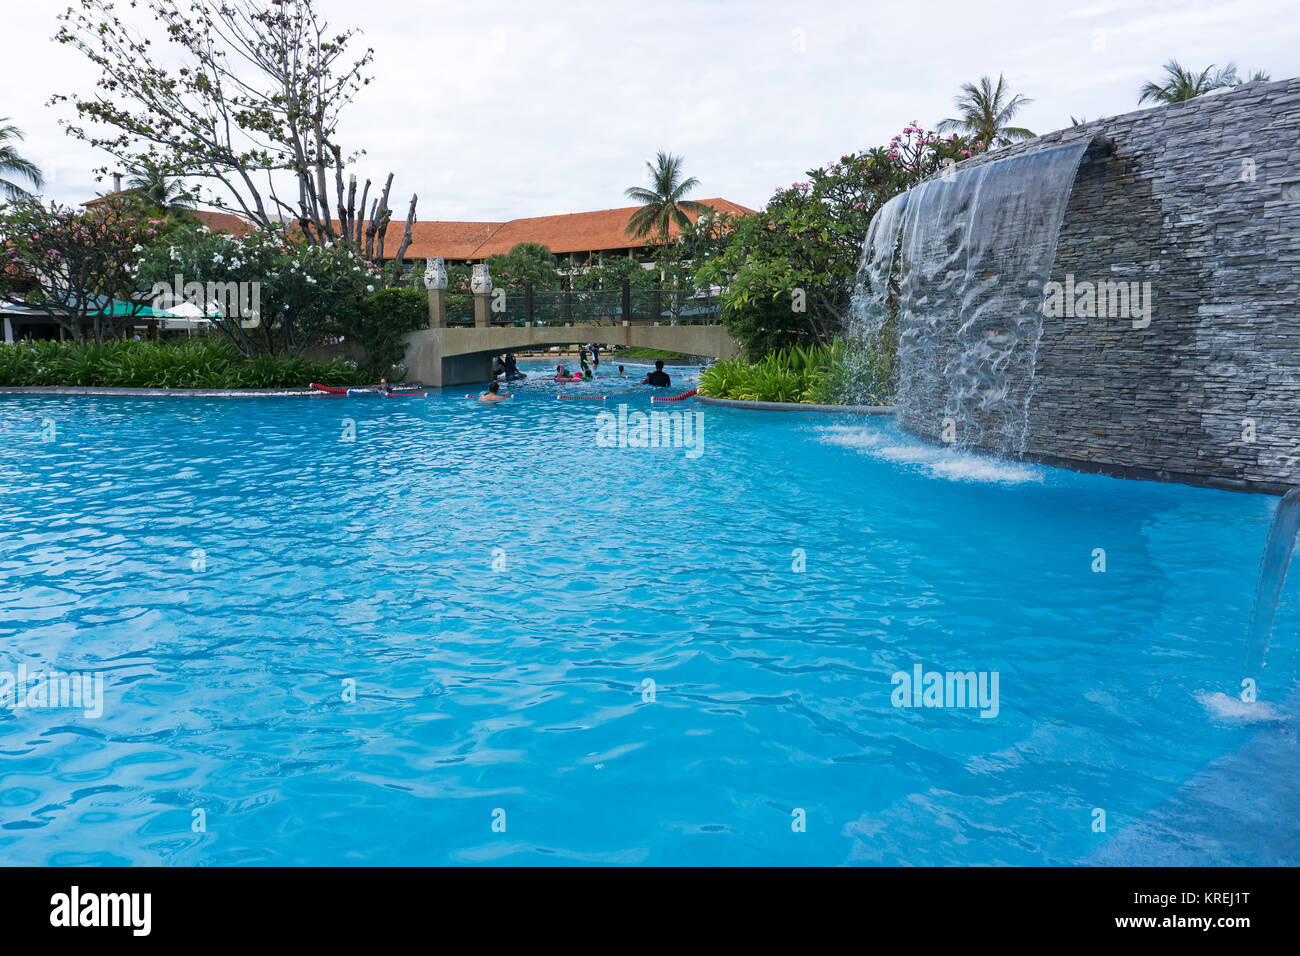 Kota Kinabalu, Malaysia - February 18, 2017: Swimming pool at Shangri-La Hotel and Resort in Sabah Borneo, Malaysia. Stock Photo